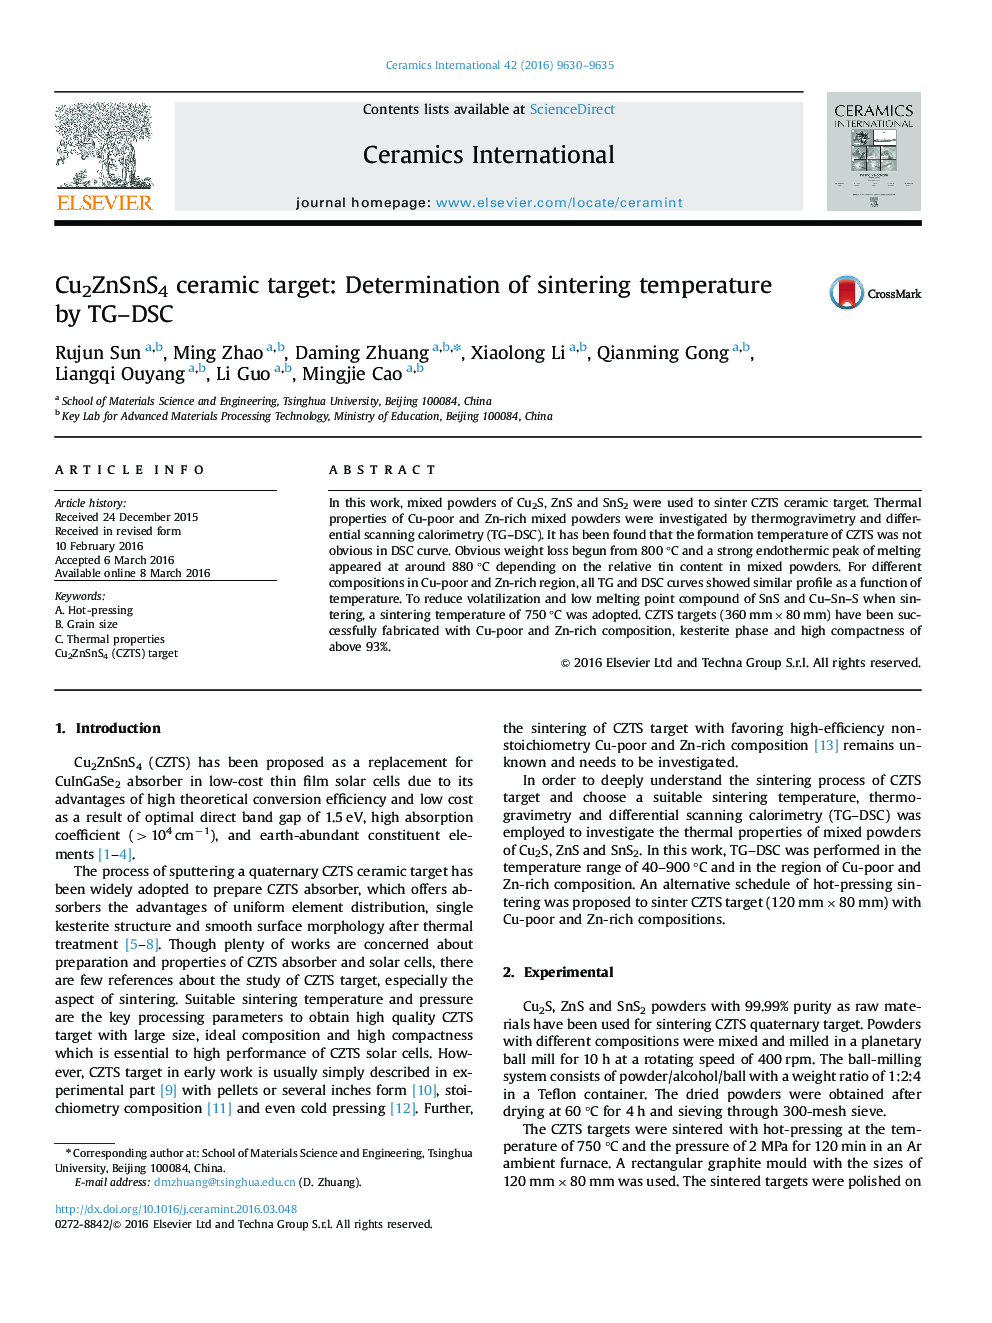 Cu2ZnSnS4 ceramic target: Determination of sintering temperature by TG–DSC